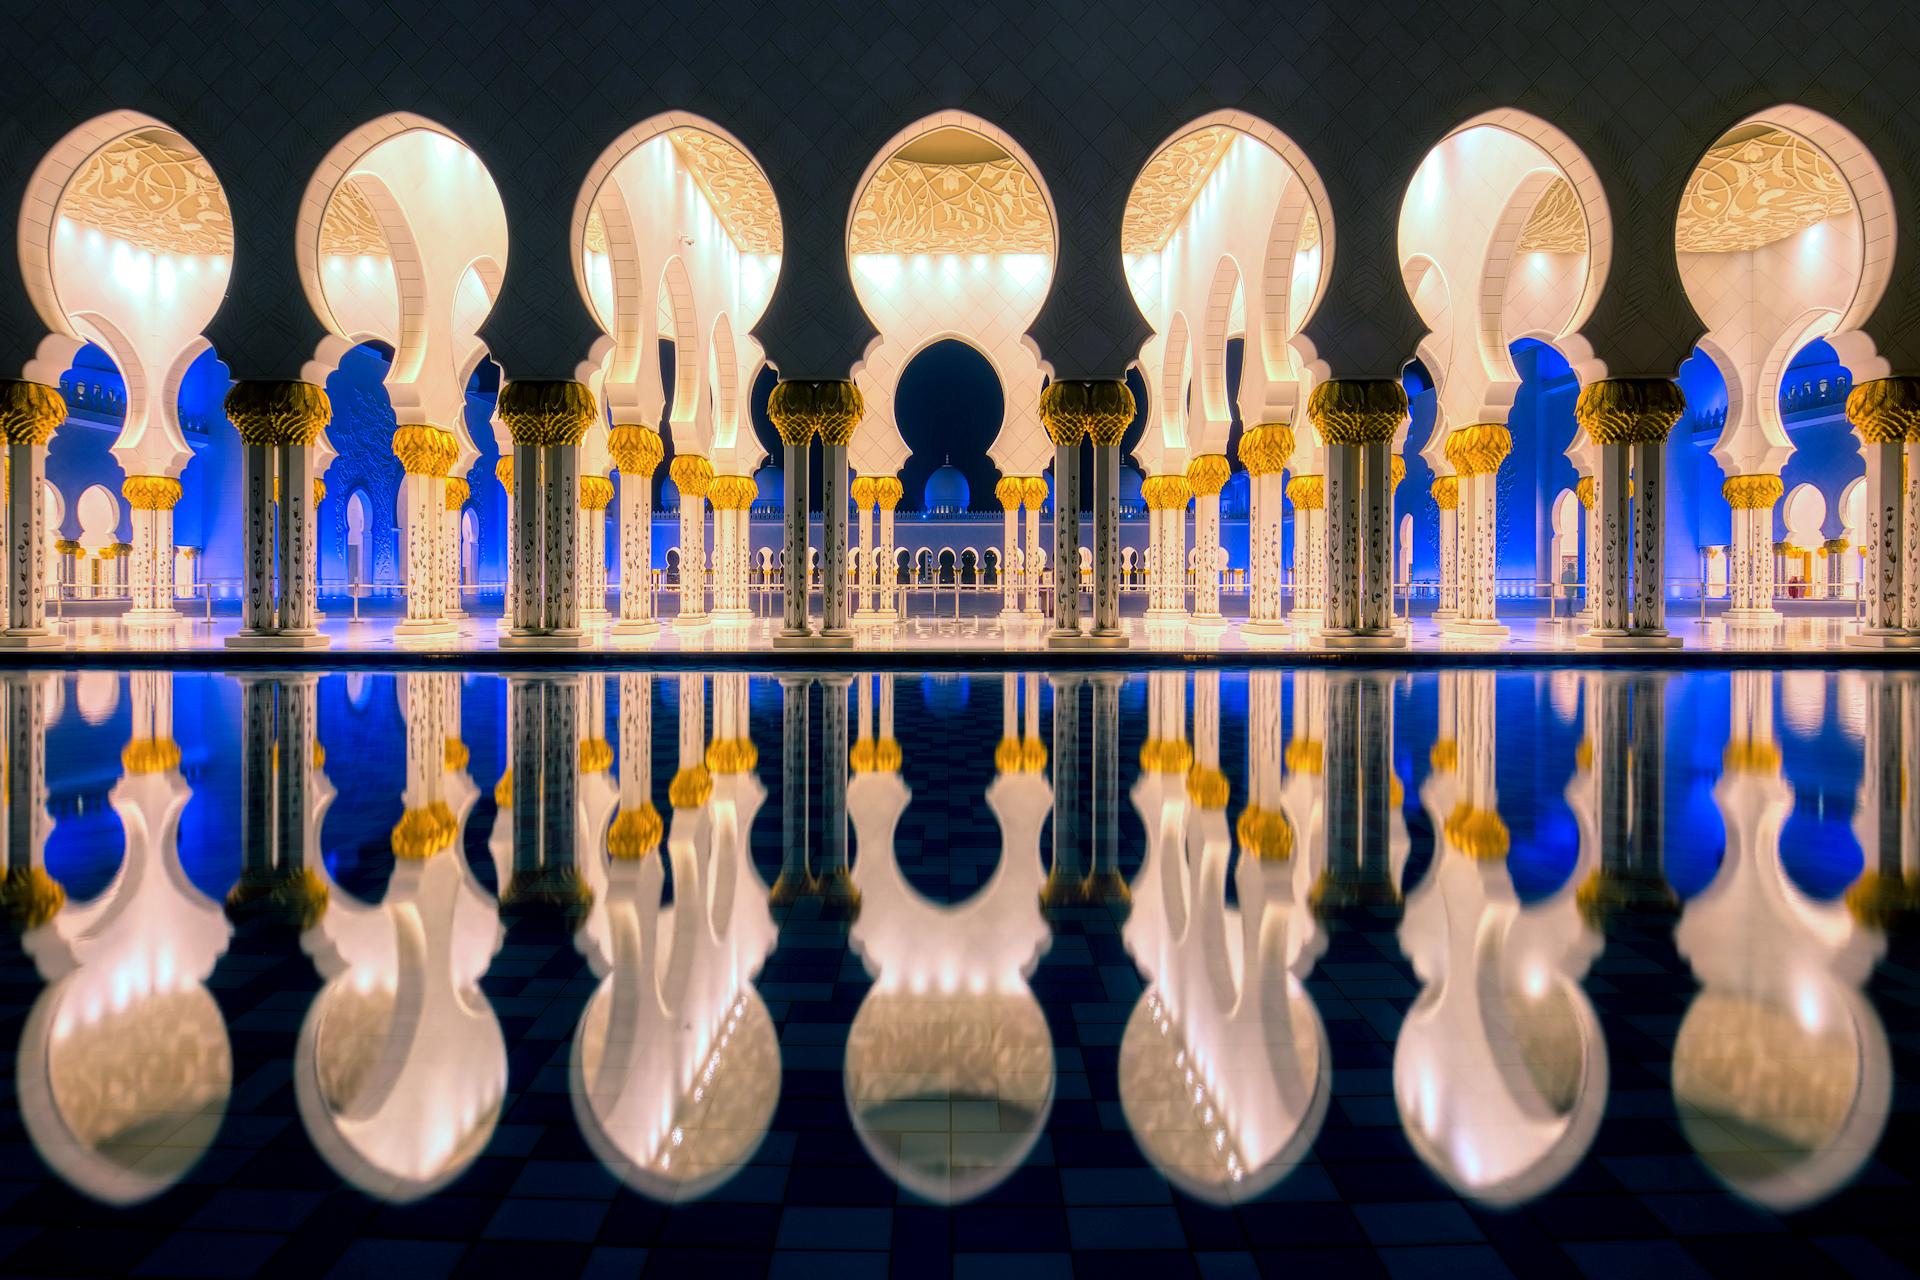 New York Photography Awards Winner - Sheikh Zayed Mosque